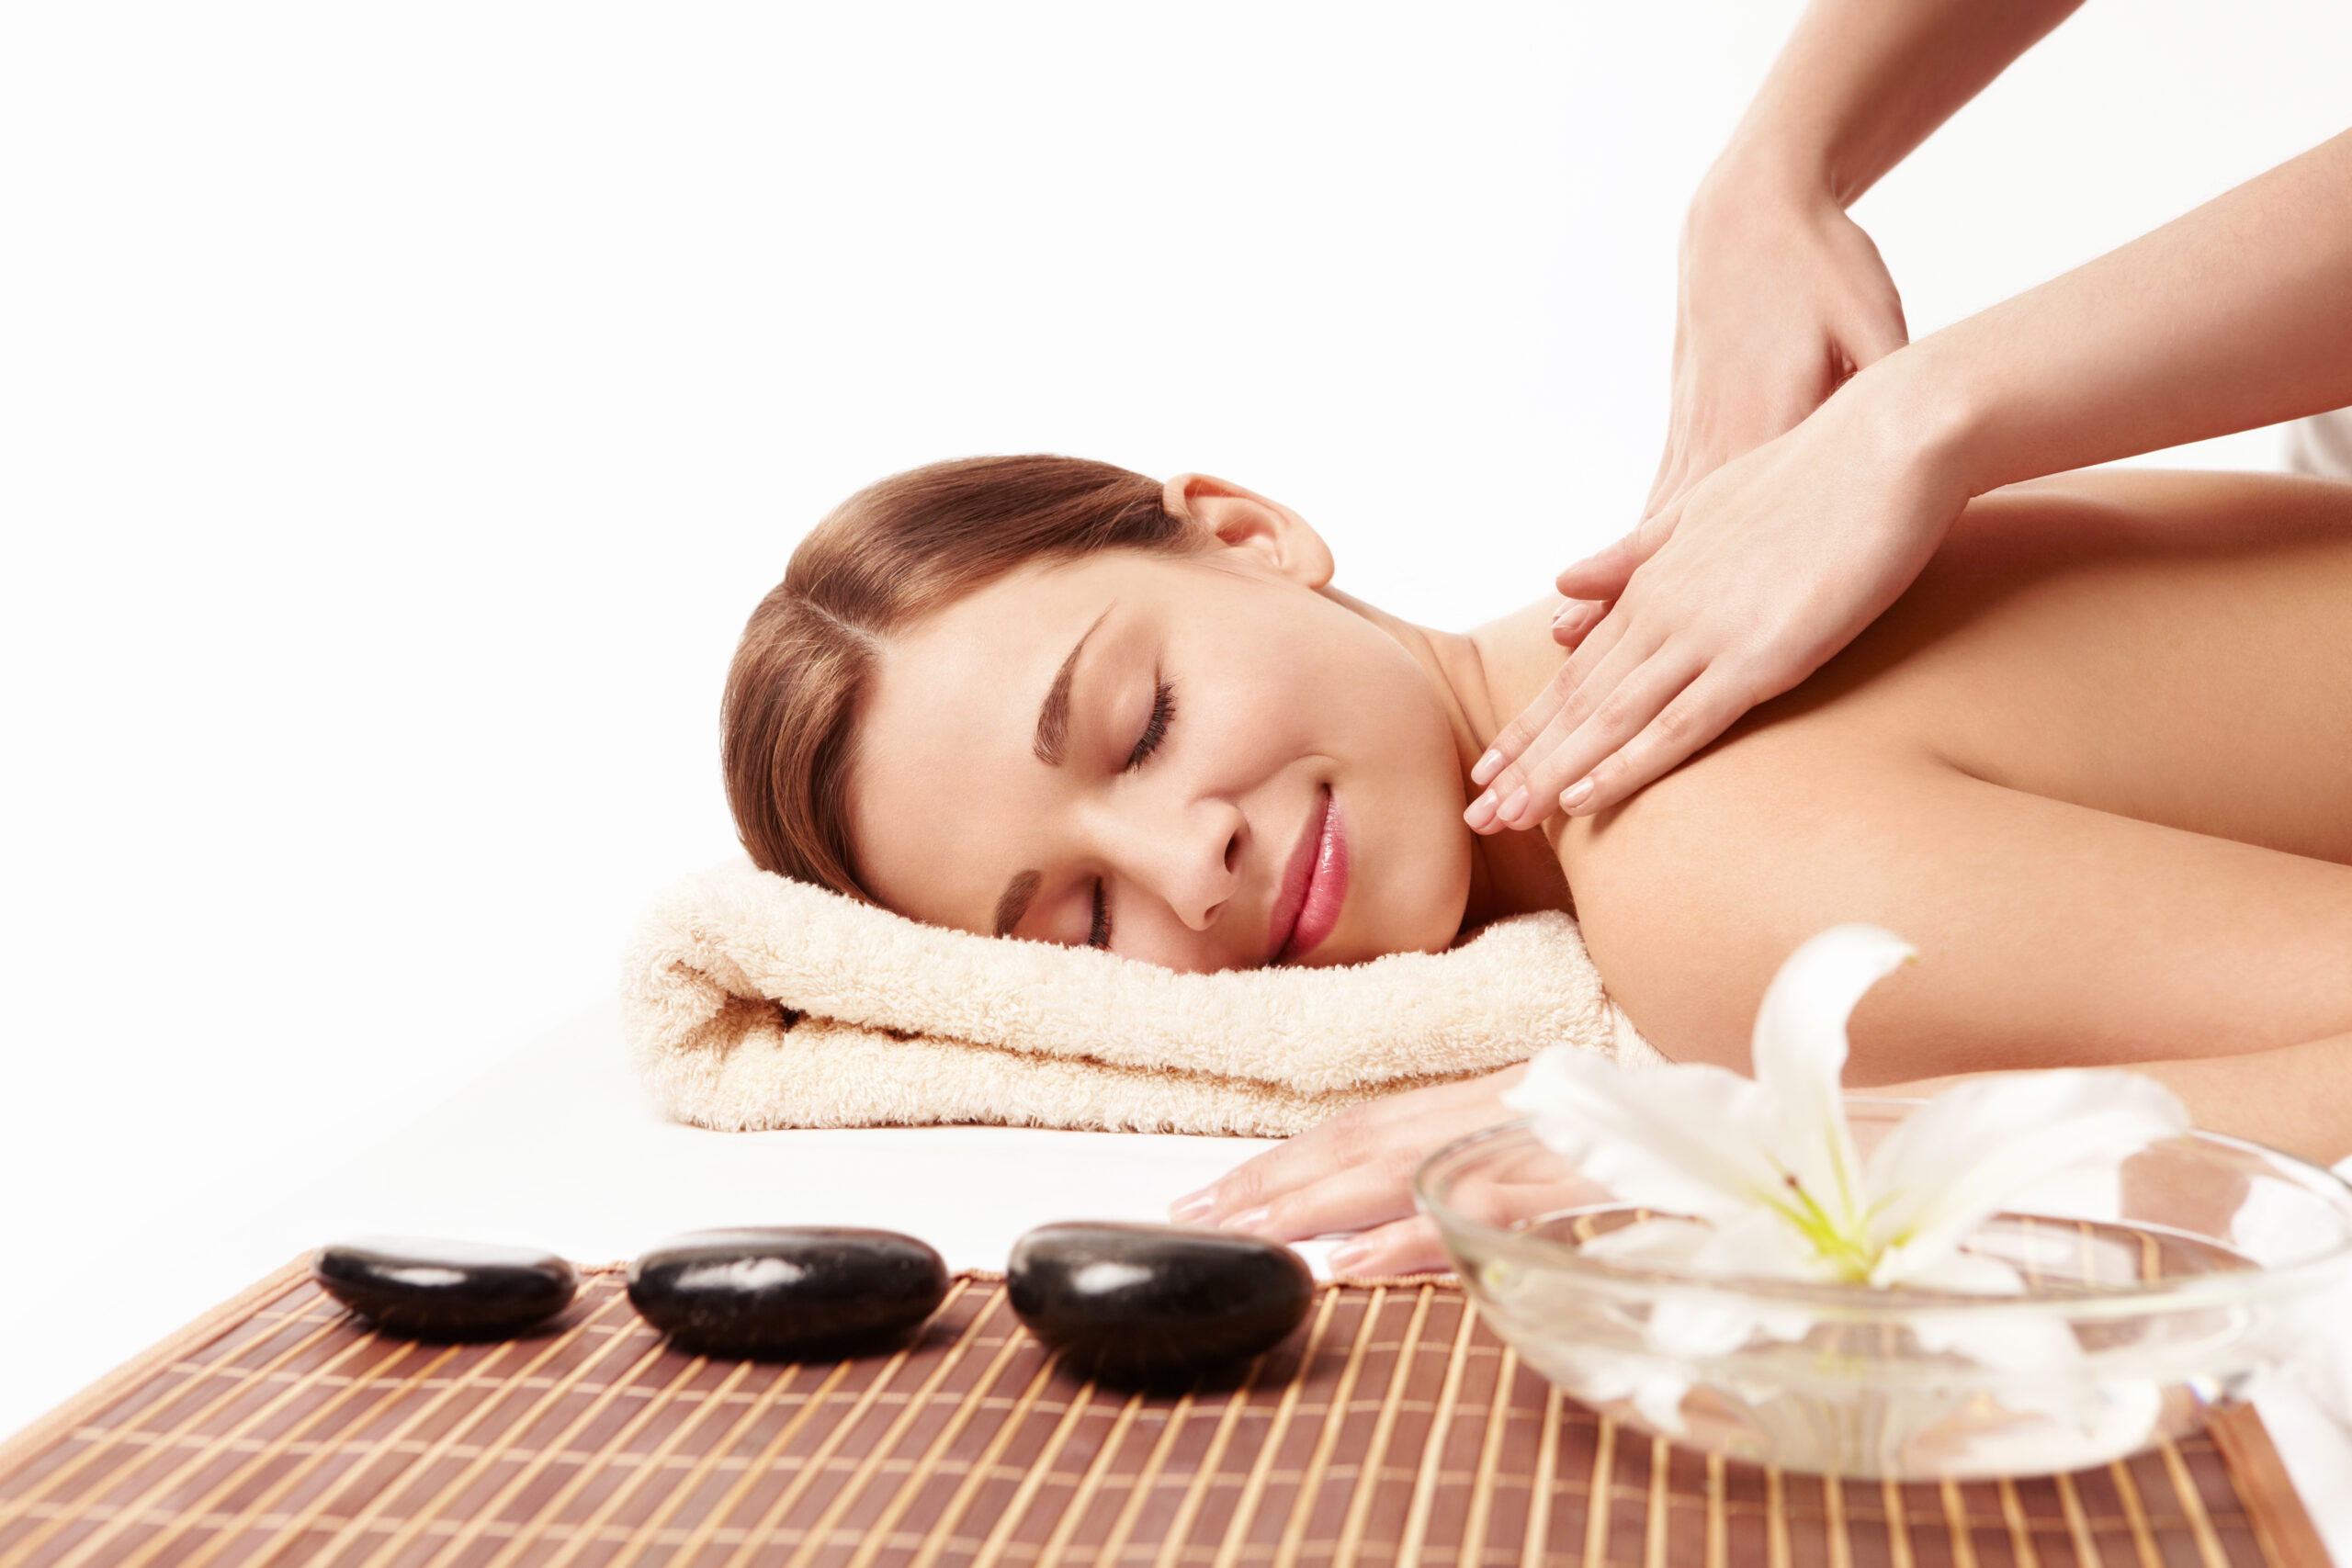 Massage Las Vegas - Asian Massage - Massage Las Vegas Service